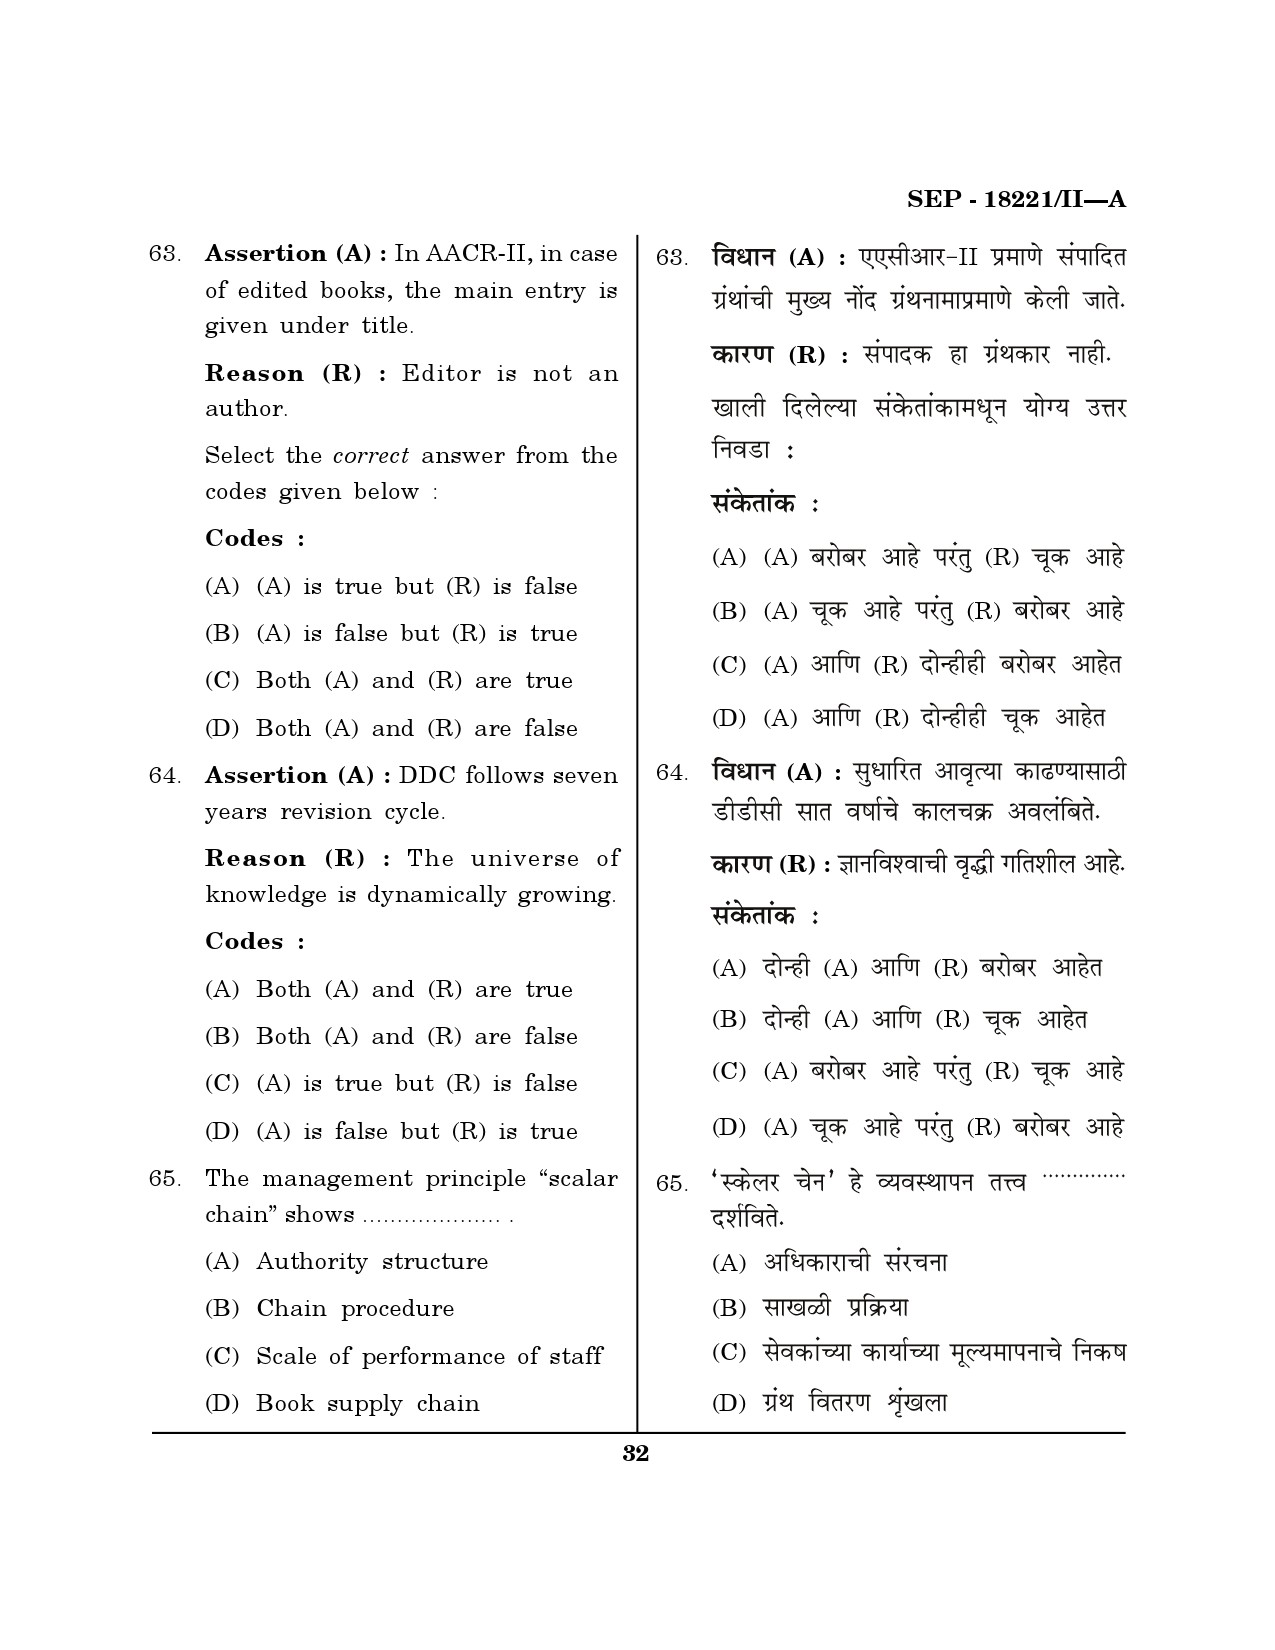 Maharashtra SET Library Information Science Exam Question Paper September 2021 31